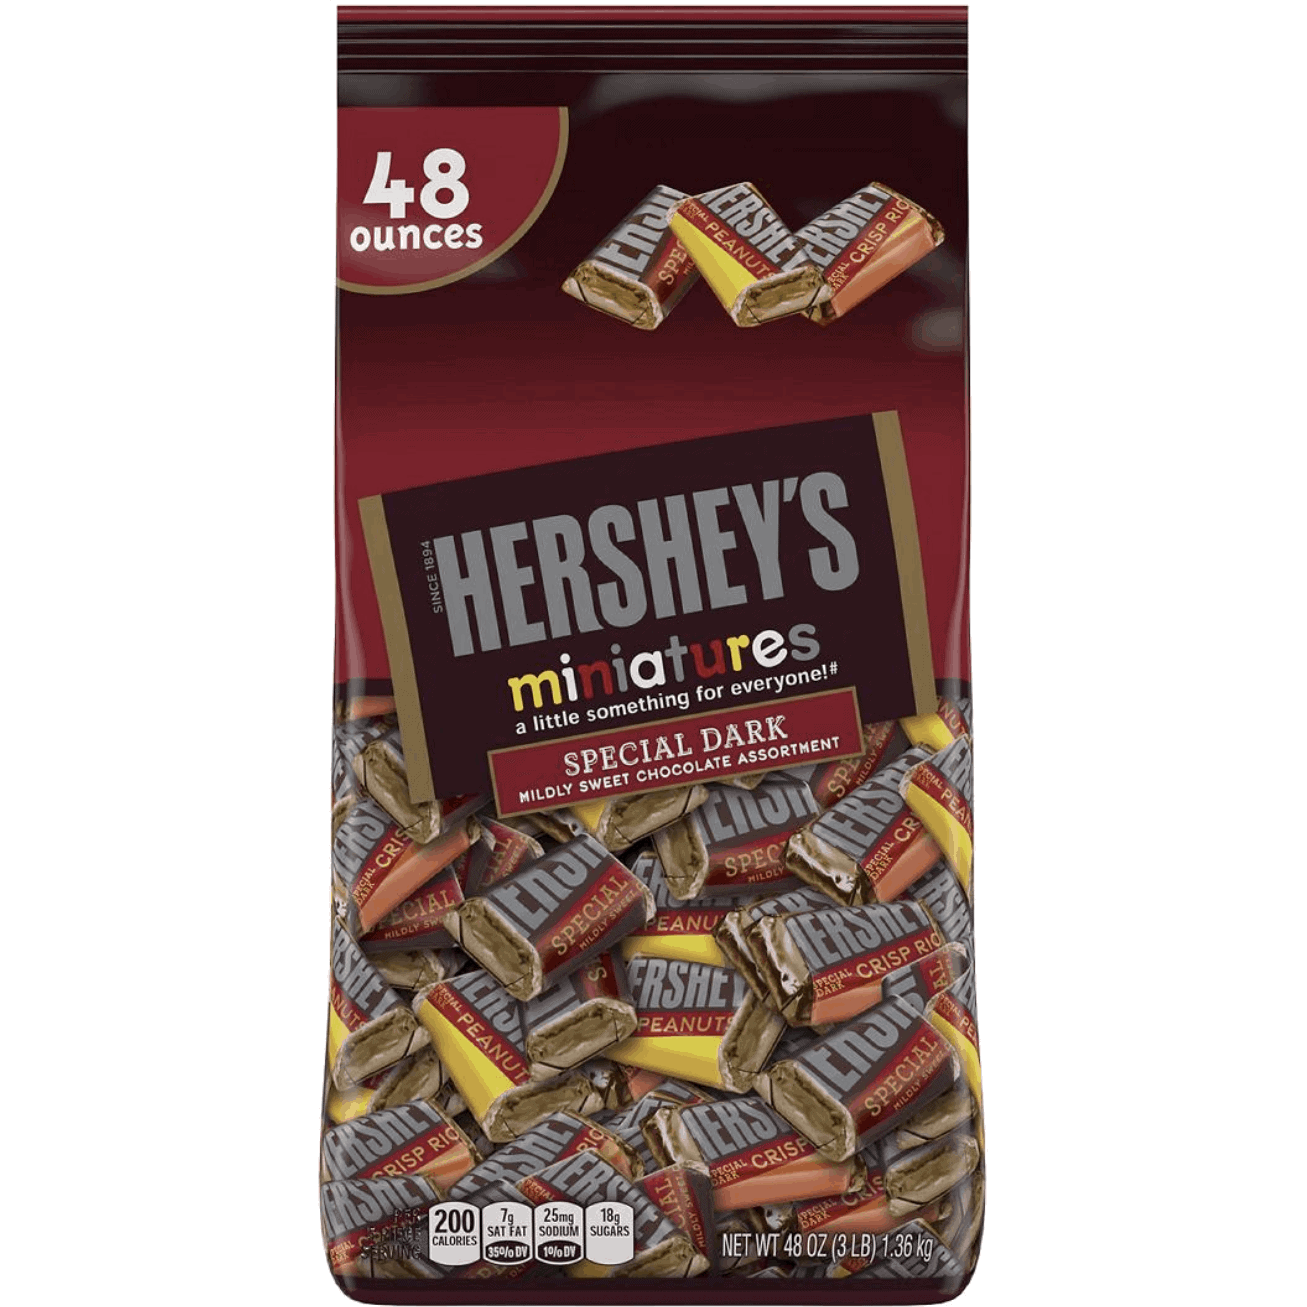 Hershey's Special Dark Chocolate Miniatures, 48 oz.